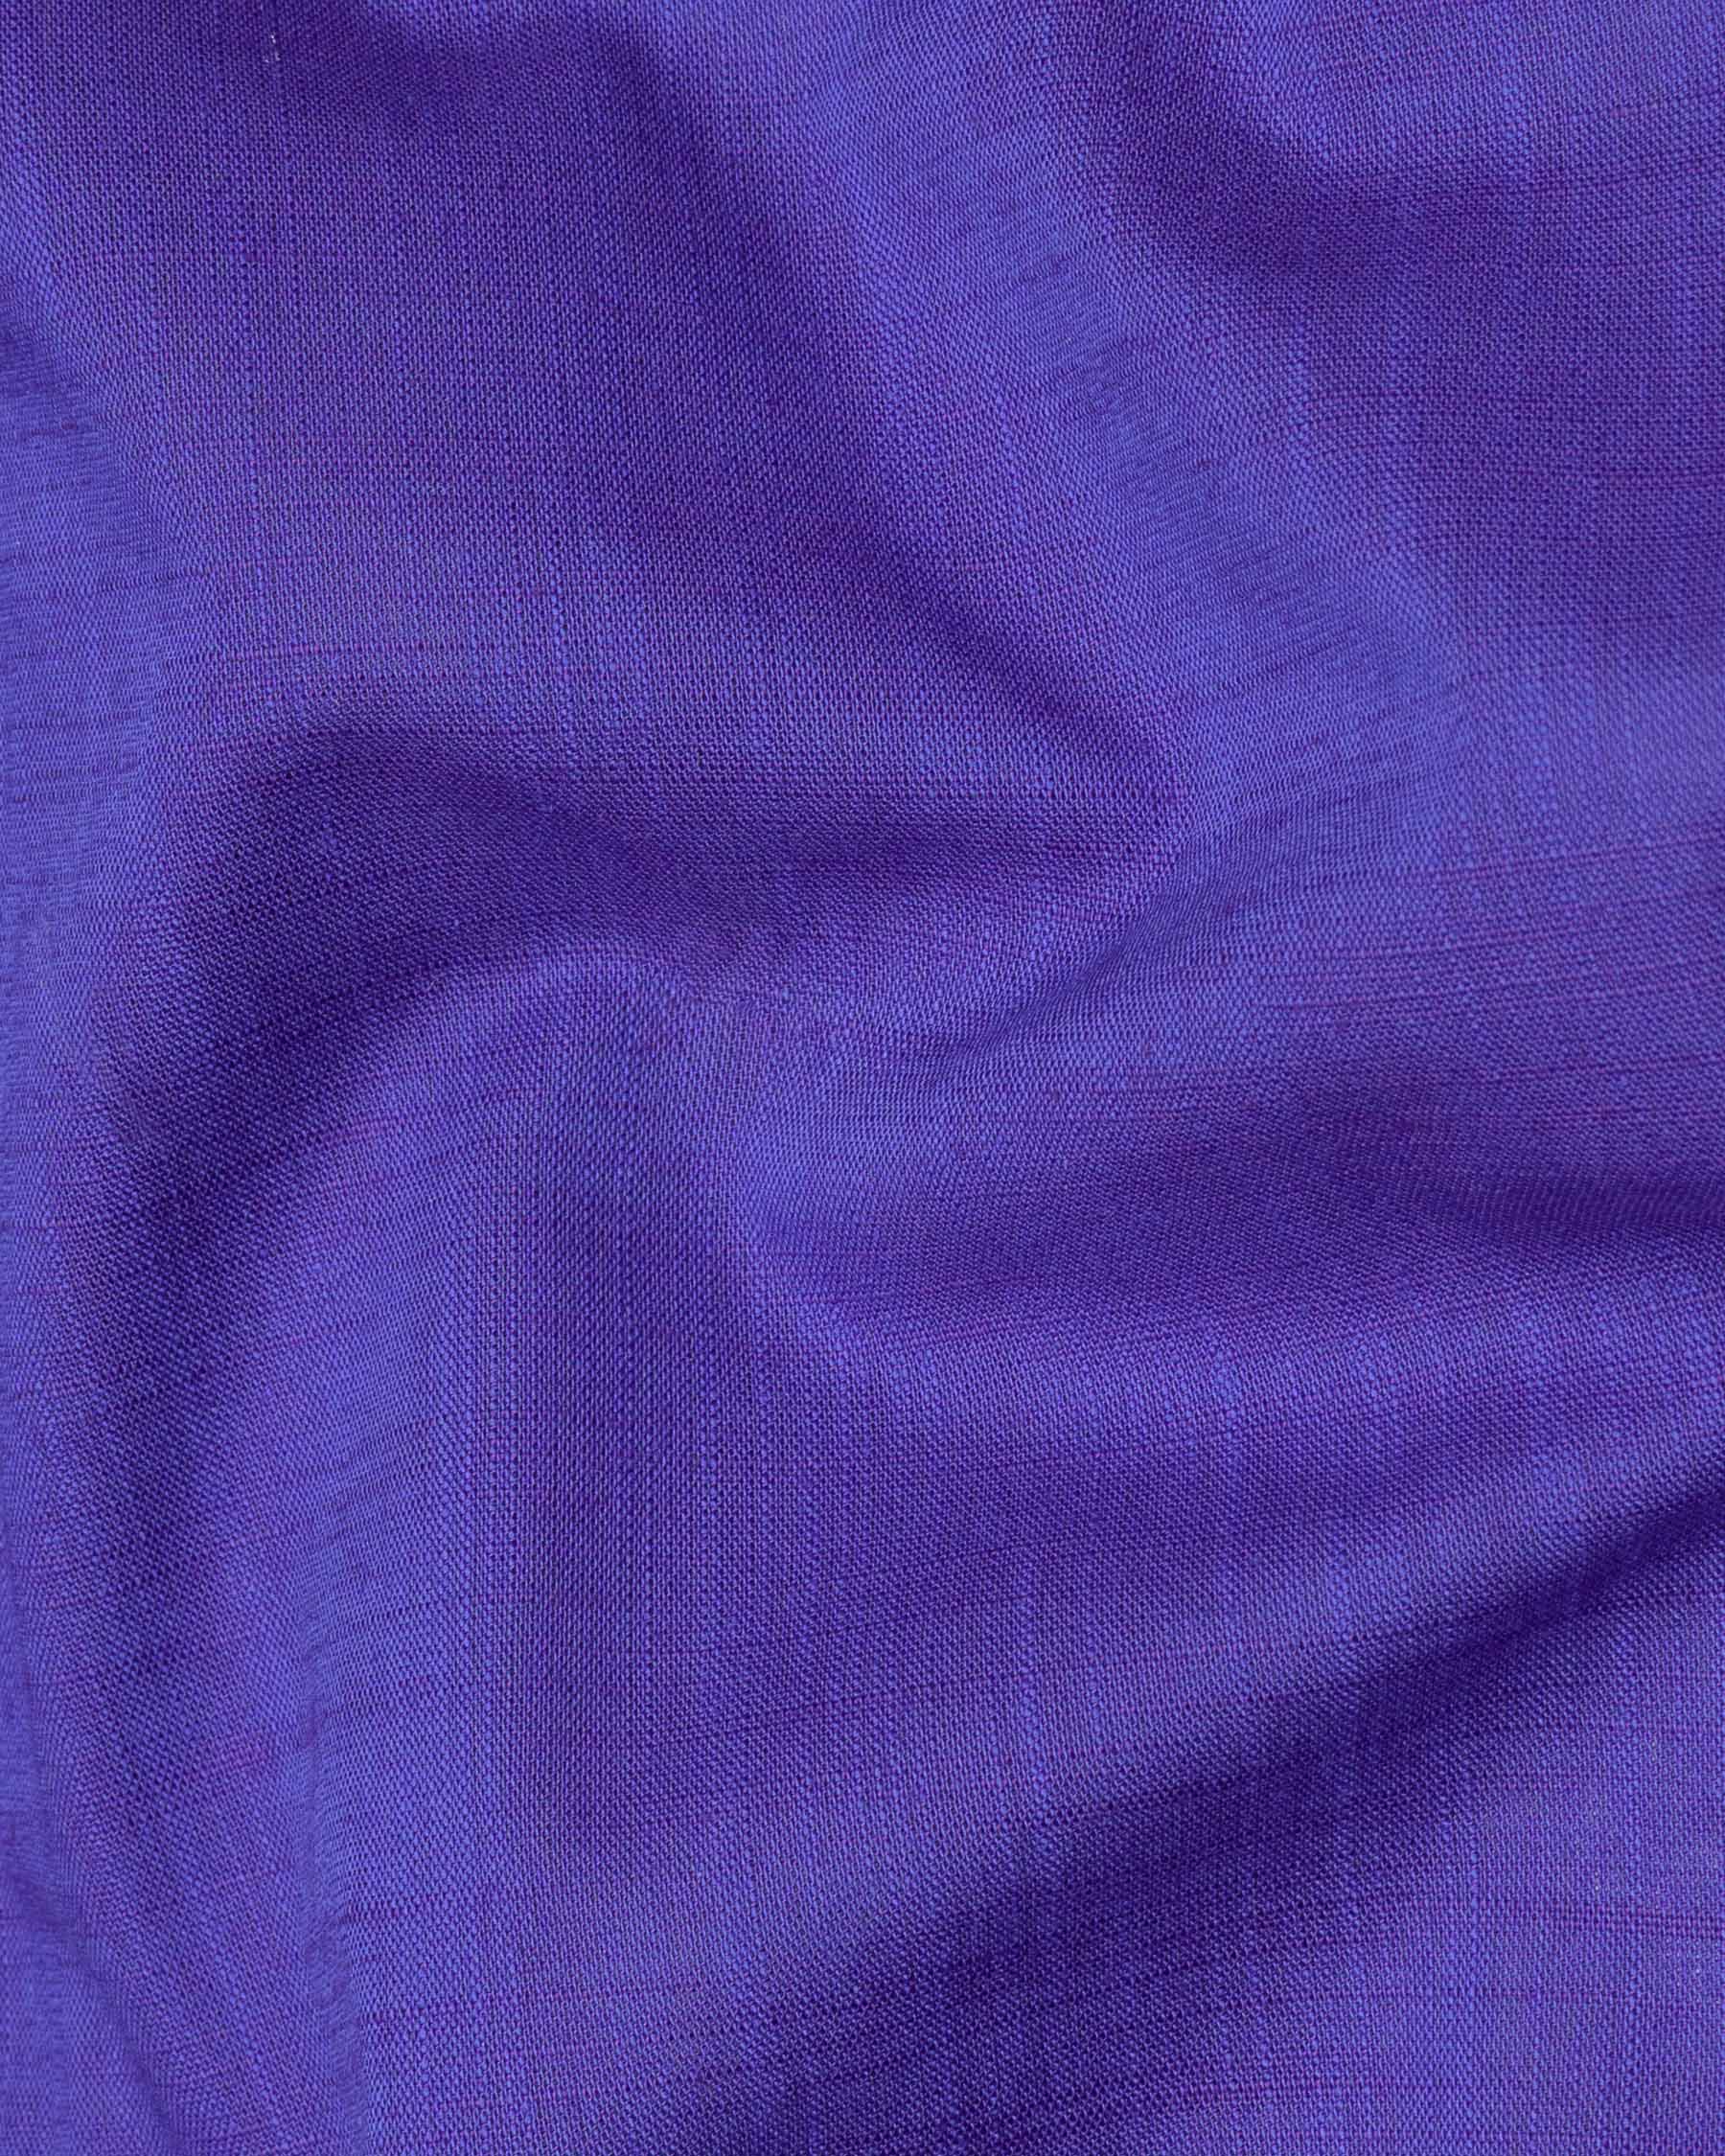 Windsor Blue Chambray Textured Premium Cotton Kurta Shirt 6315-KS-38, 6315-KS-H-38, 6315-KS-39, 6315-KS-H-39, 6315-KS-40, 6315-KS-H-40, 6315-KS-42, 6315-KS-H-42, 6315-KS-44, 6315-KS-H-44, 6315-KS-46, 6315-KS-H-46, 6315-KS-48, 6315-KS-H-48, 6315-KS-50, 6315-KS-H-50, 6315-KS-52, 6315-KS-H-52